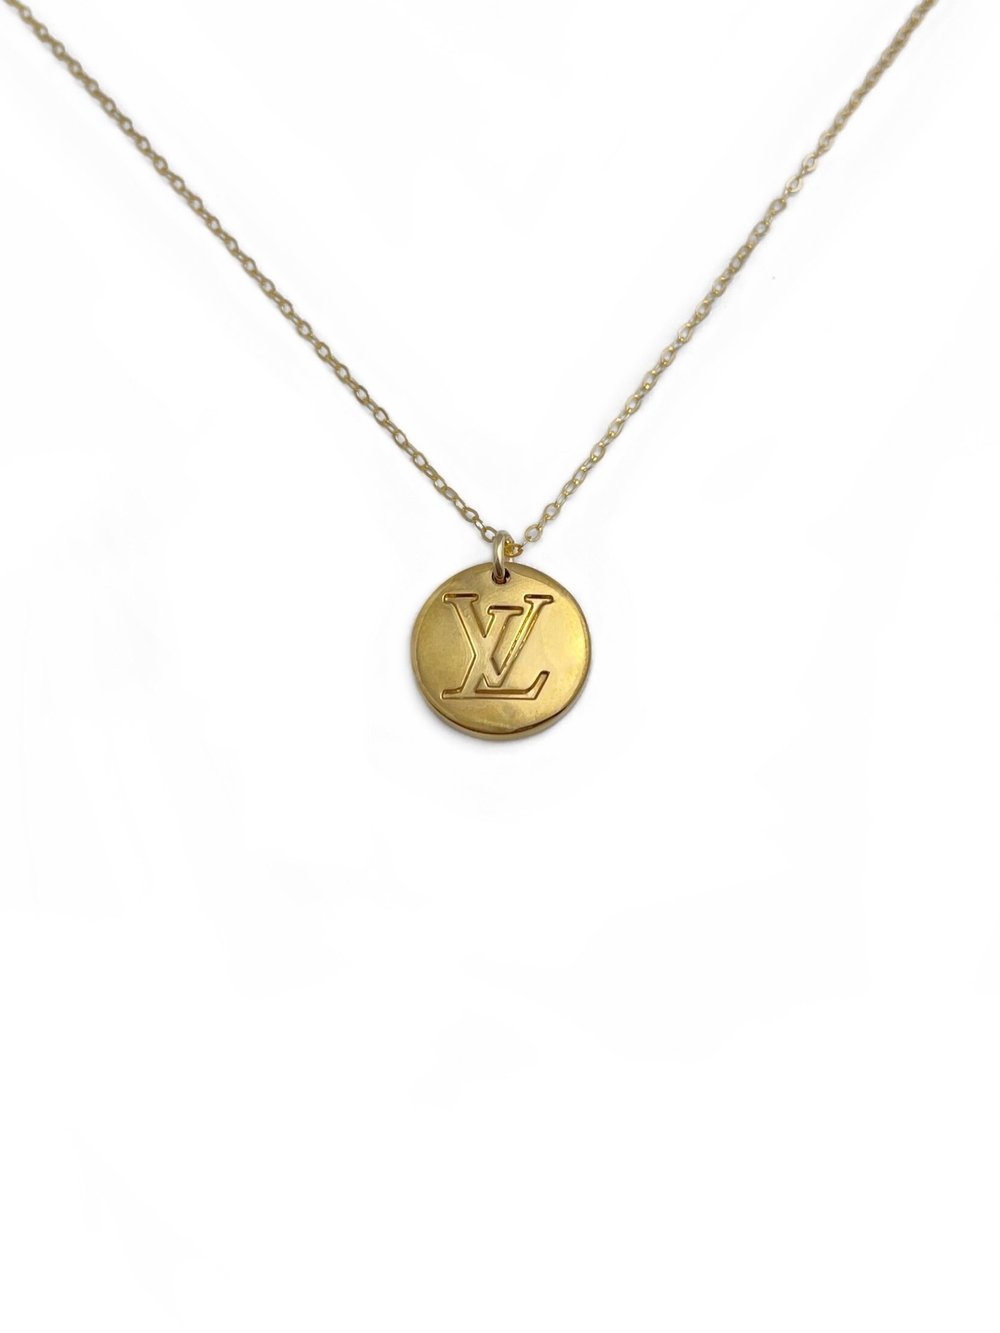 Authentic Louis Vuitton Repurposed Beige Gold Miss LV Necklace